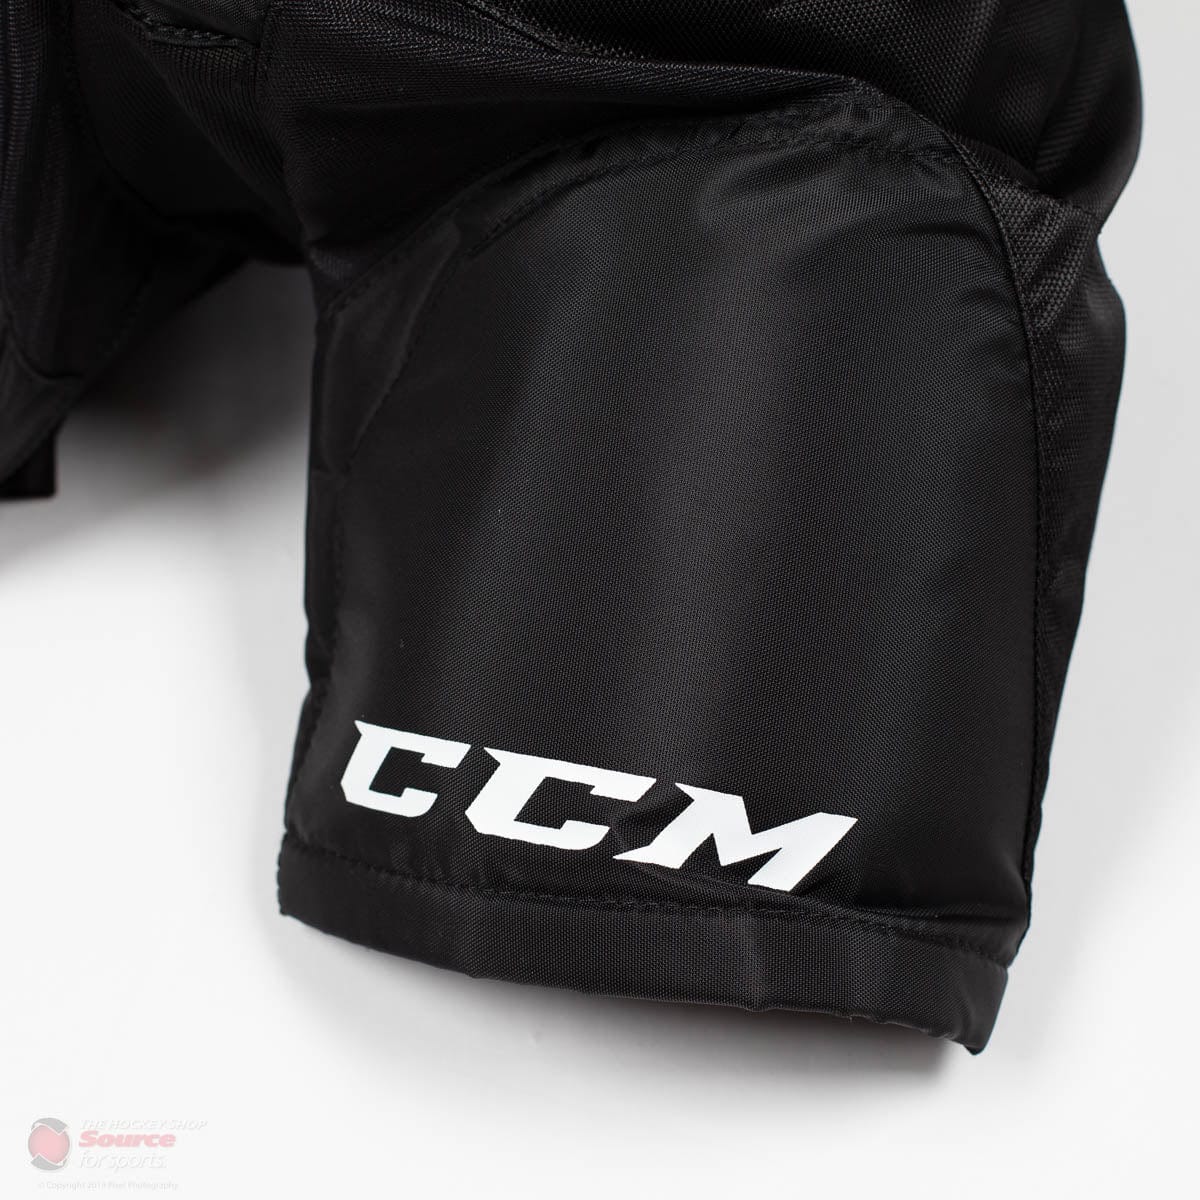 CCM Tacks 9060 Junior Hockey Pants